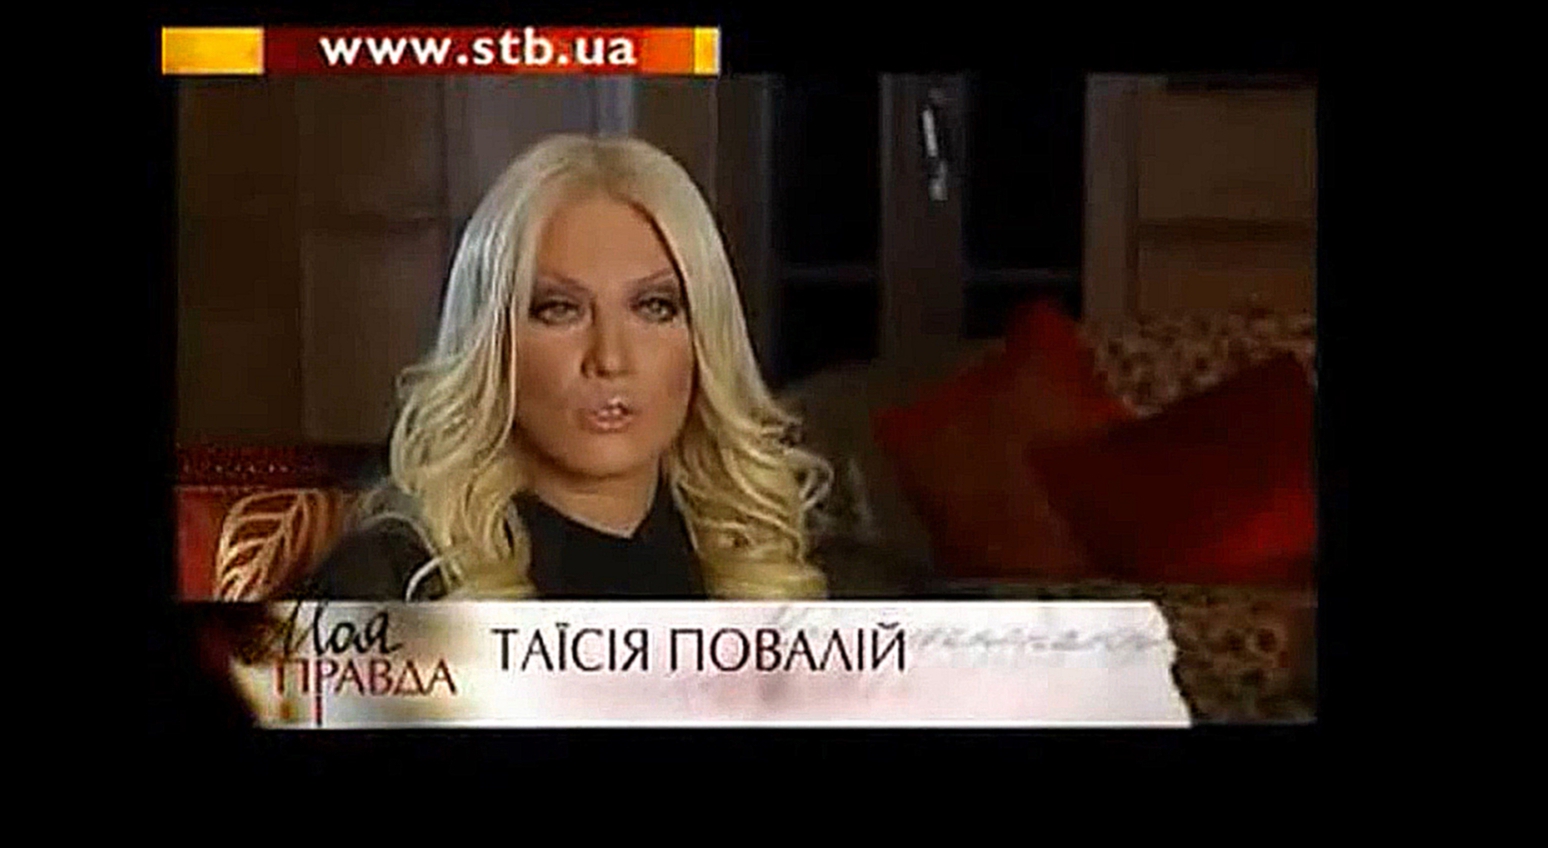 «Моя правда. Таисия Повалий» / «Без гламура» 2008 Укр. версия